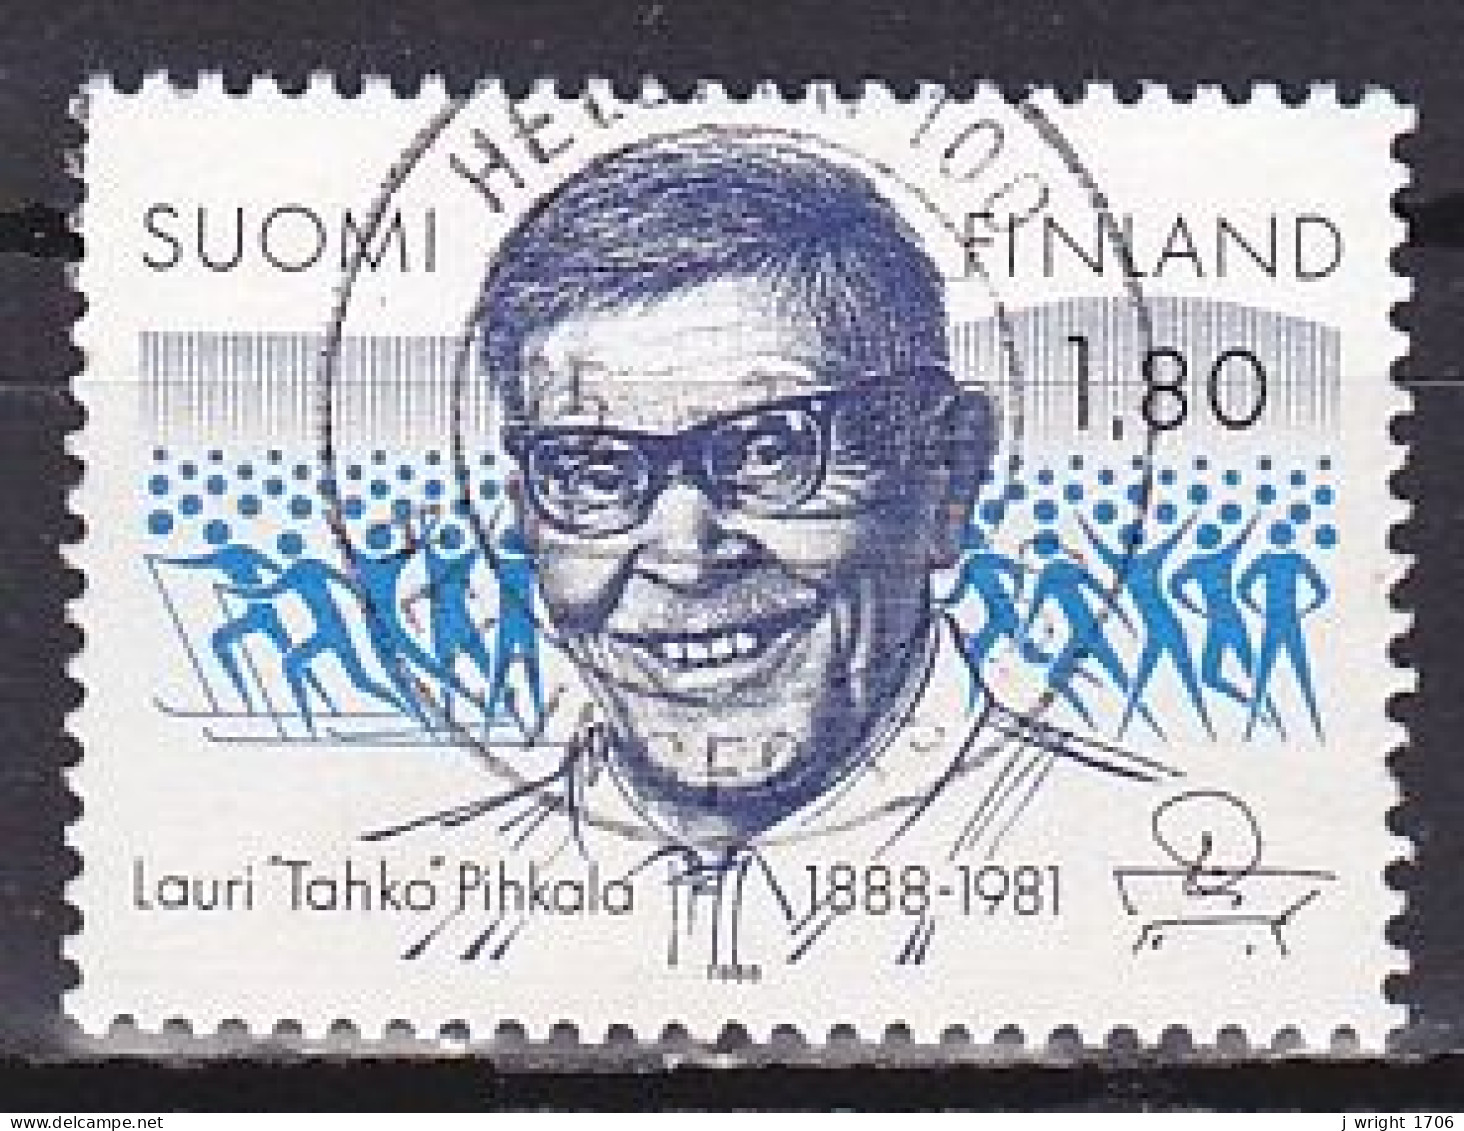 Finland, 1988, Lauri Pihkala, 1.80mk, USED - Used Stamps